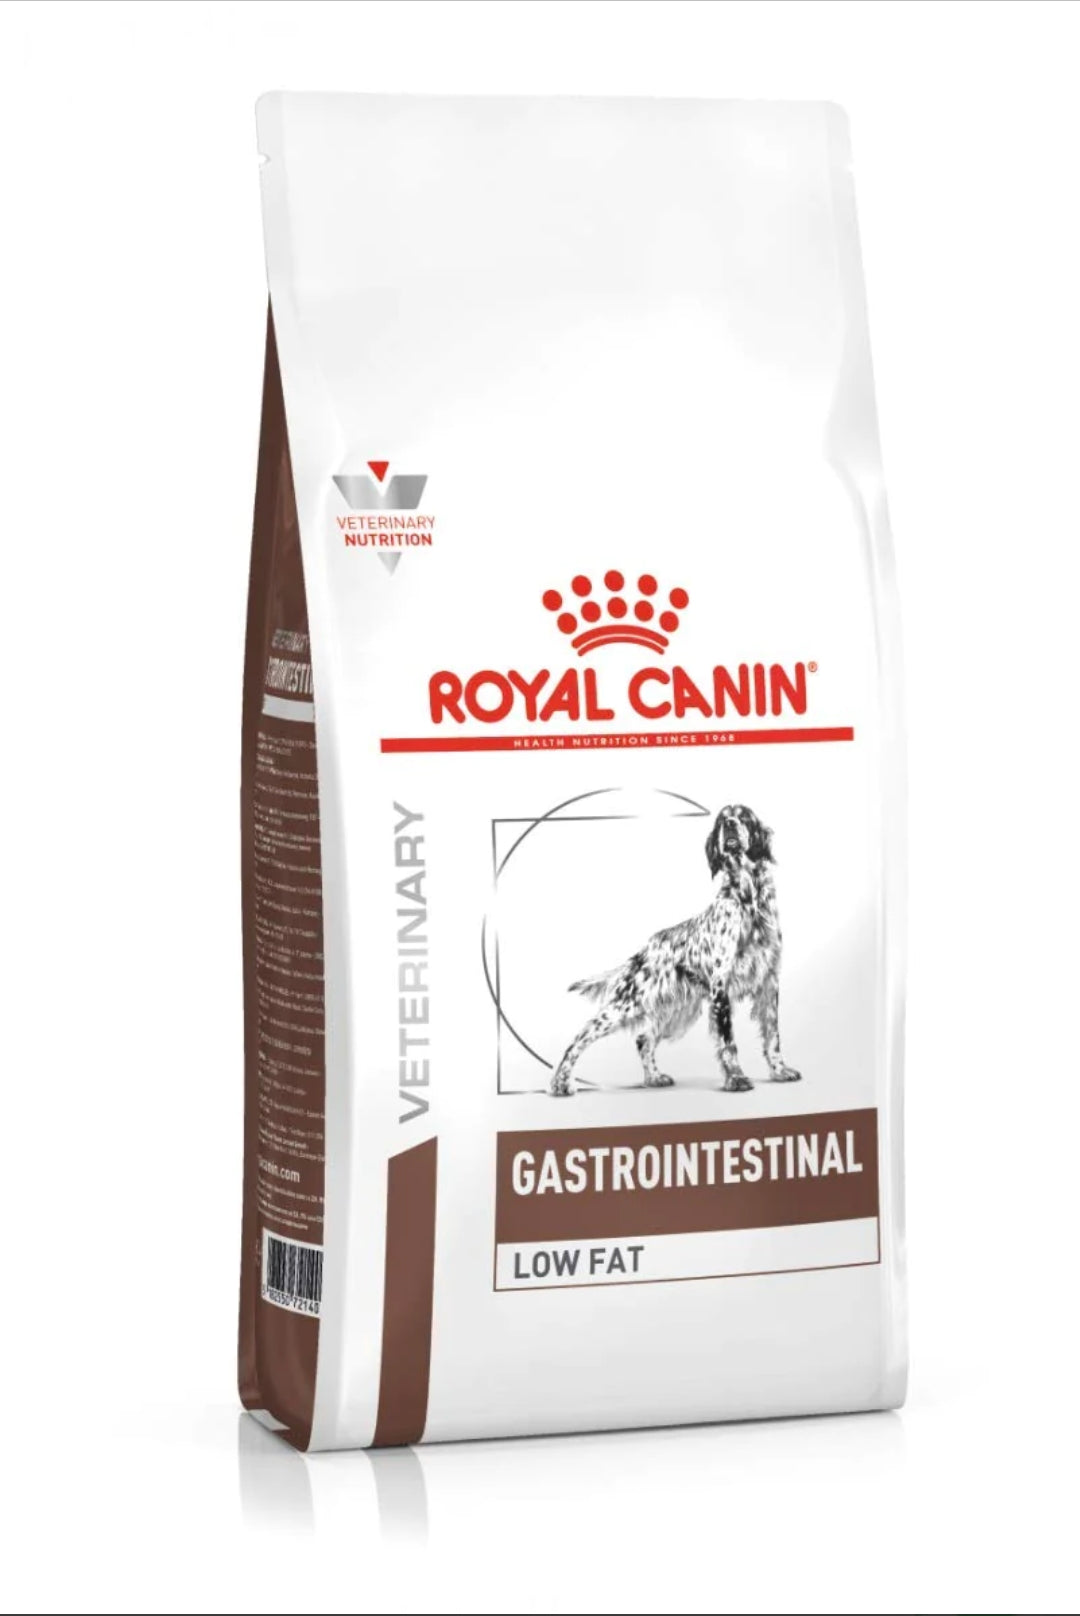 Royal canin Gastrointestinal Low fat adult Dog food 1.5kg